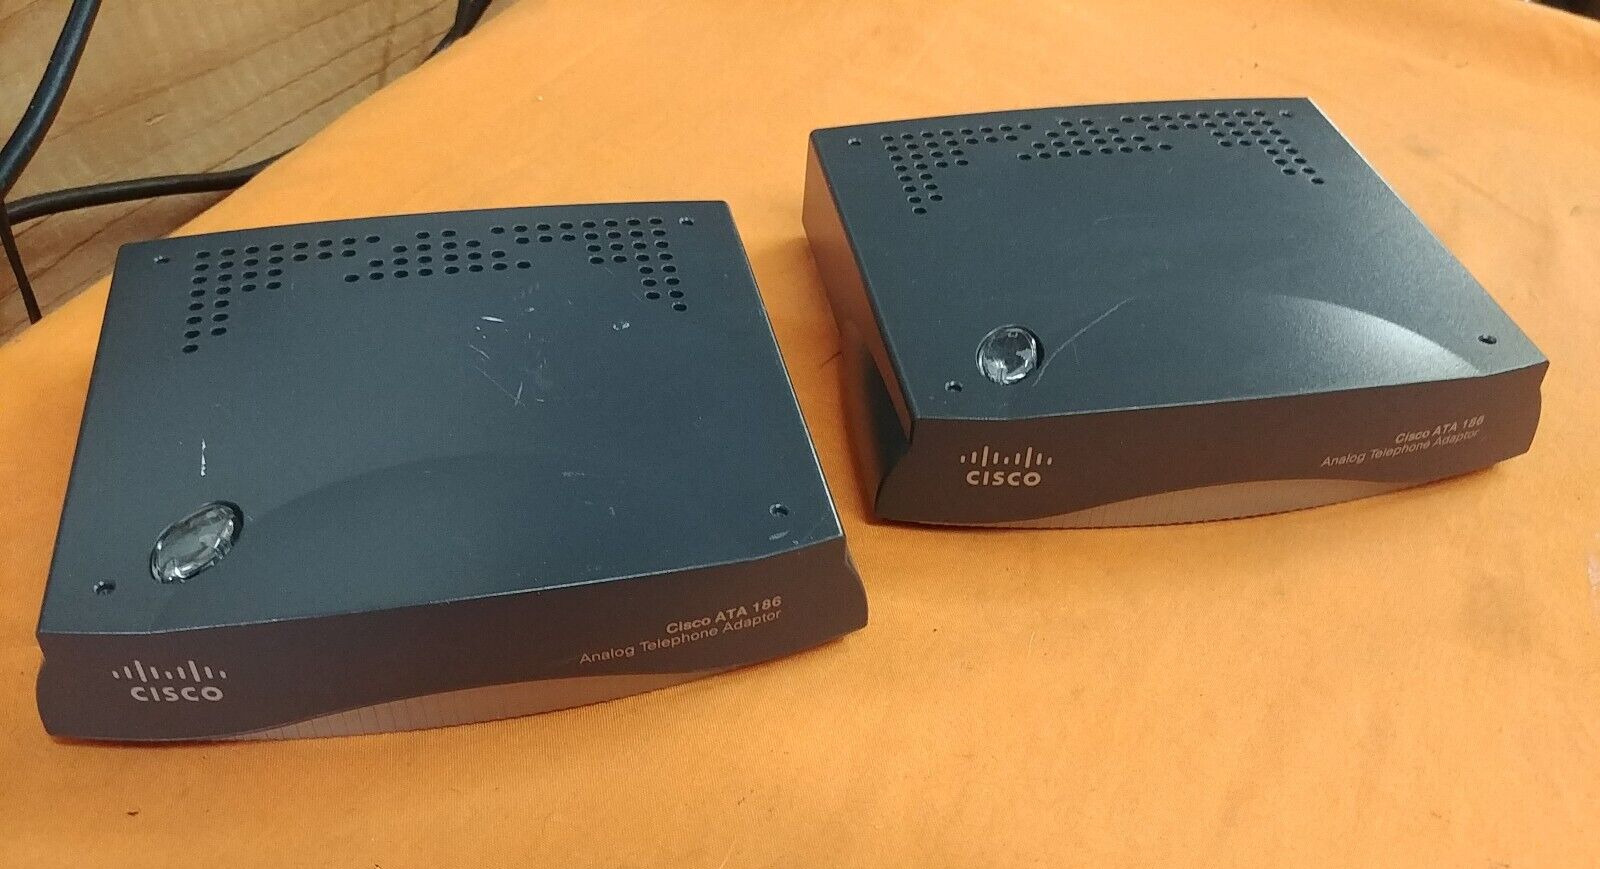 Lot of 2 Cisco ATA 186 Analog Telephone Adapter Fully - no power adapters - Used